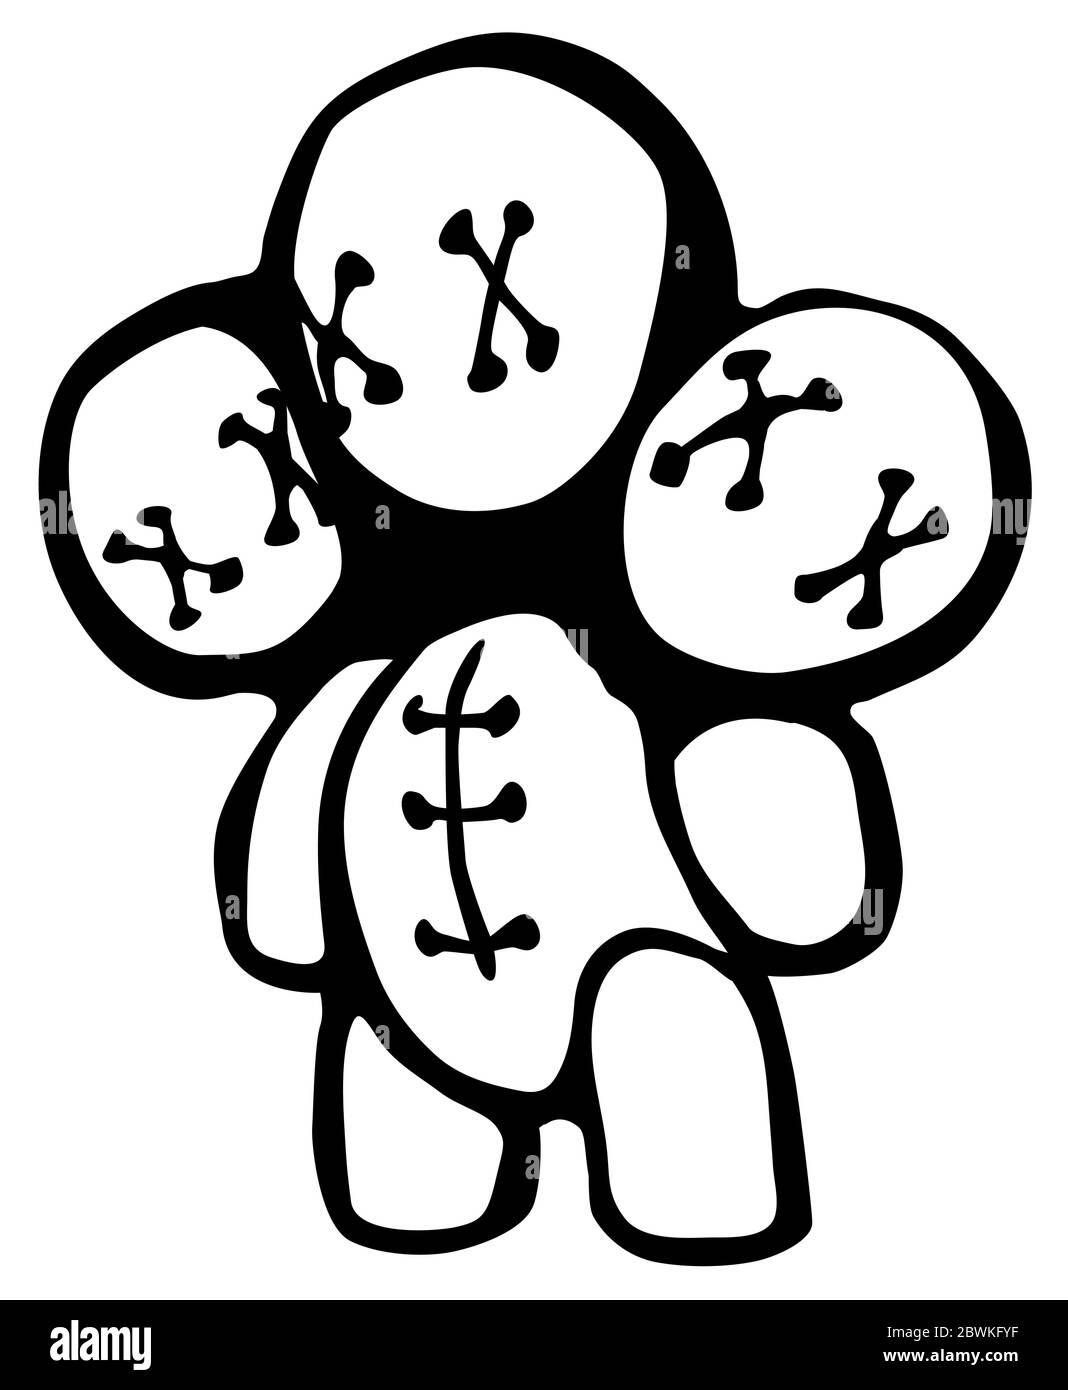 Voodoo doll three head stencil black, vector illustration, vertical, isolated Stock Vector